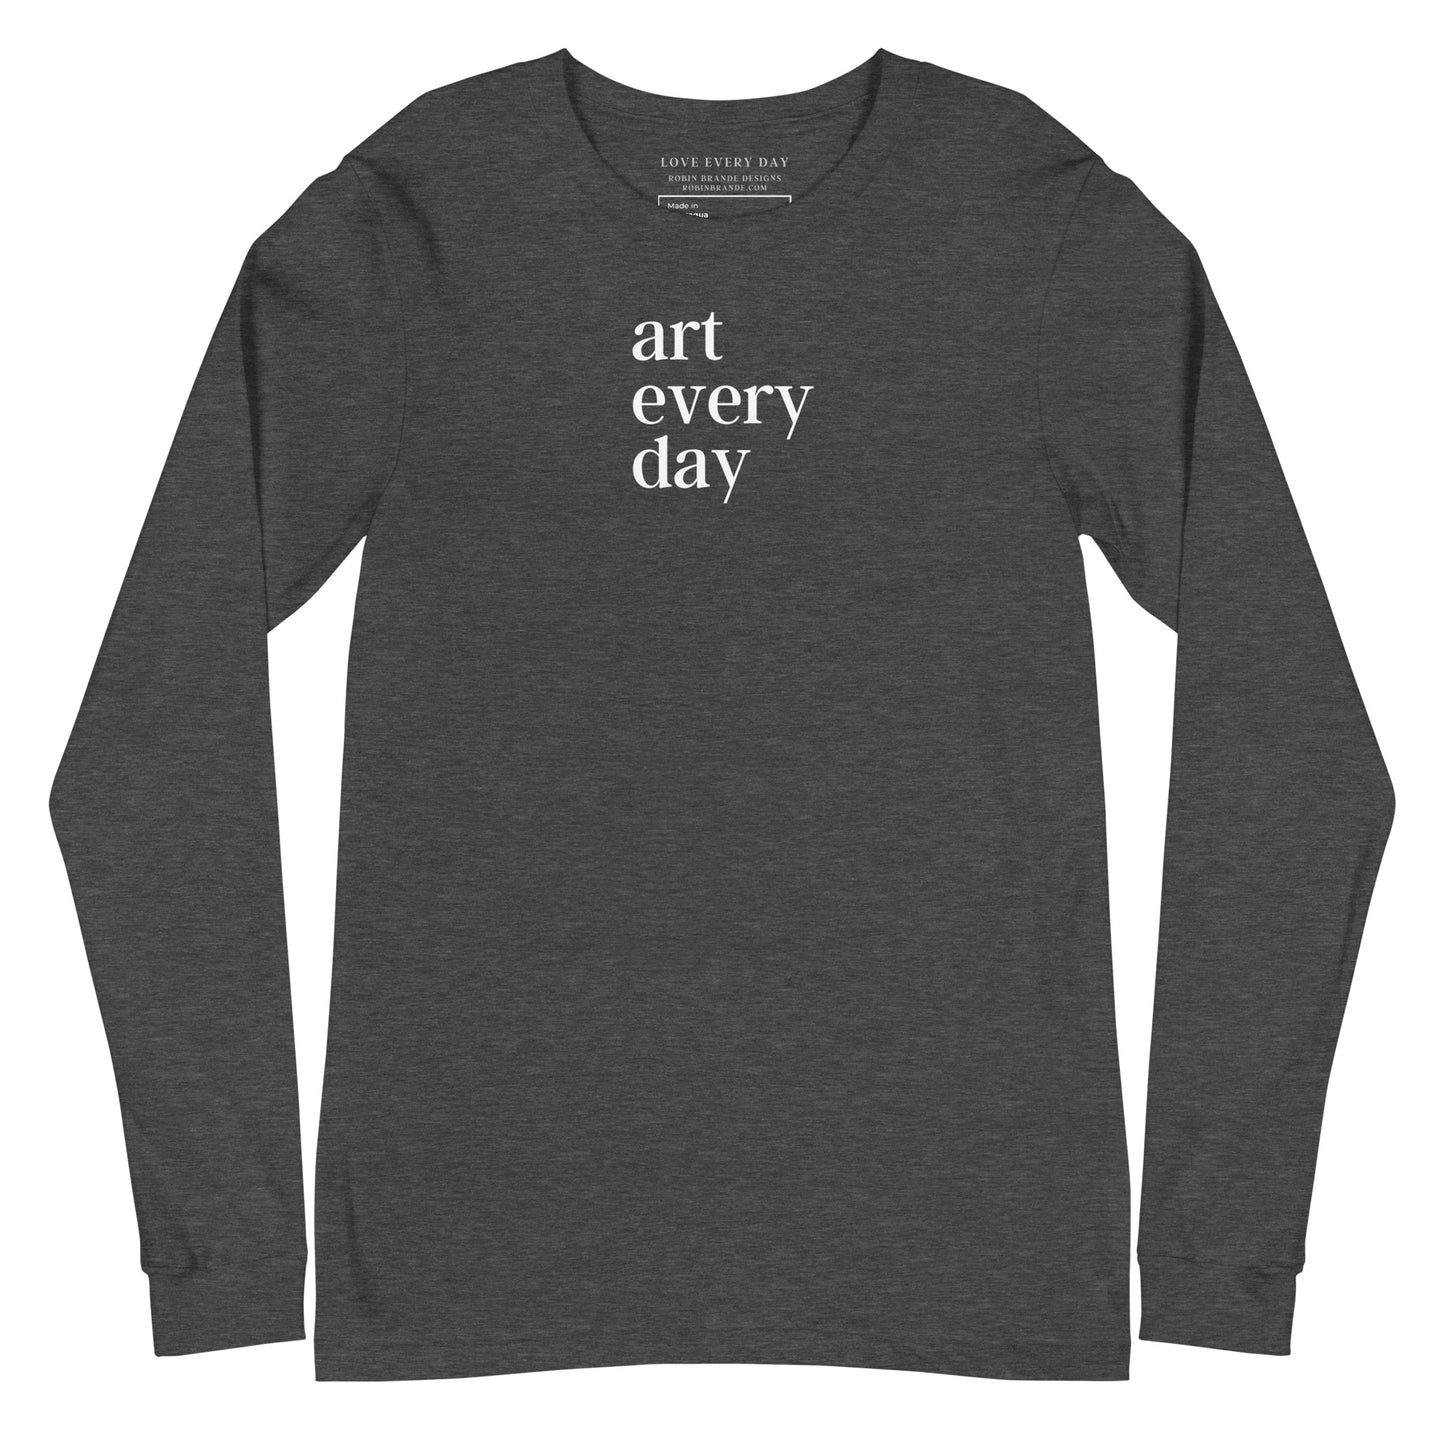 Art Every Day Unisex Soft Long-Sleeved T-shirt